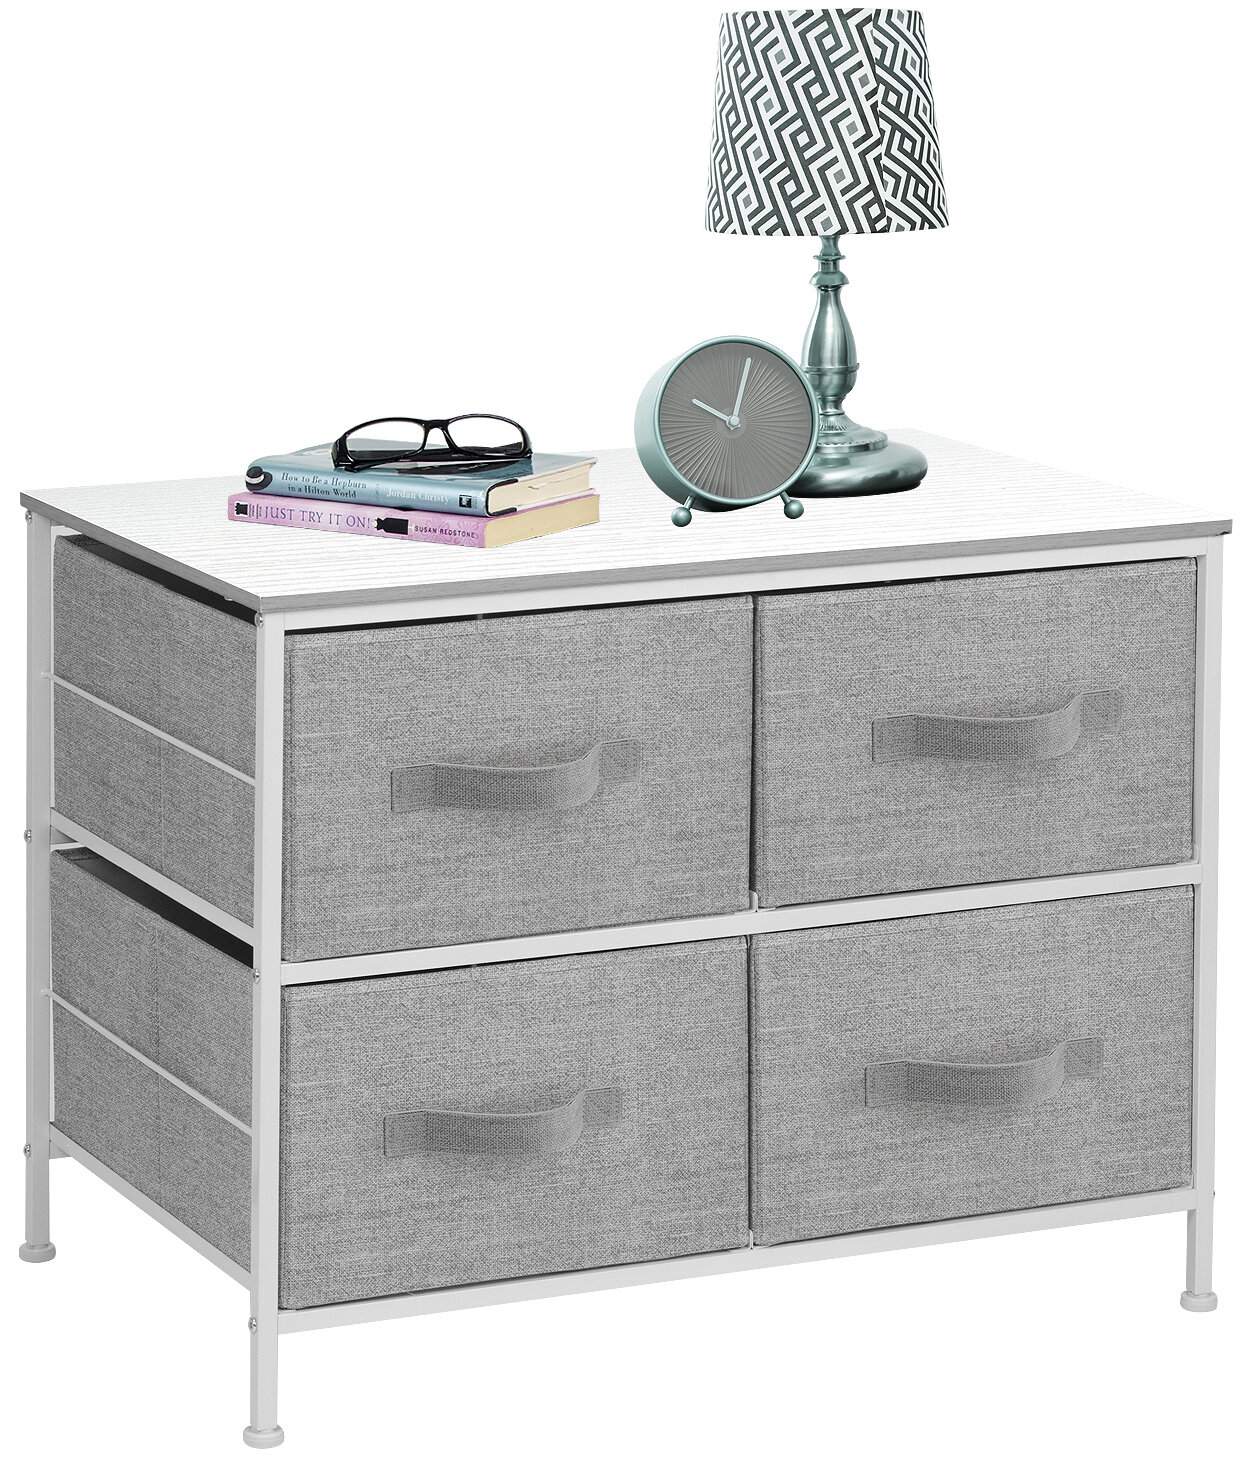 Ebern Designs Ulu 4 Drawer Dresser Reviews Wayfair Ca